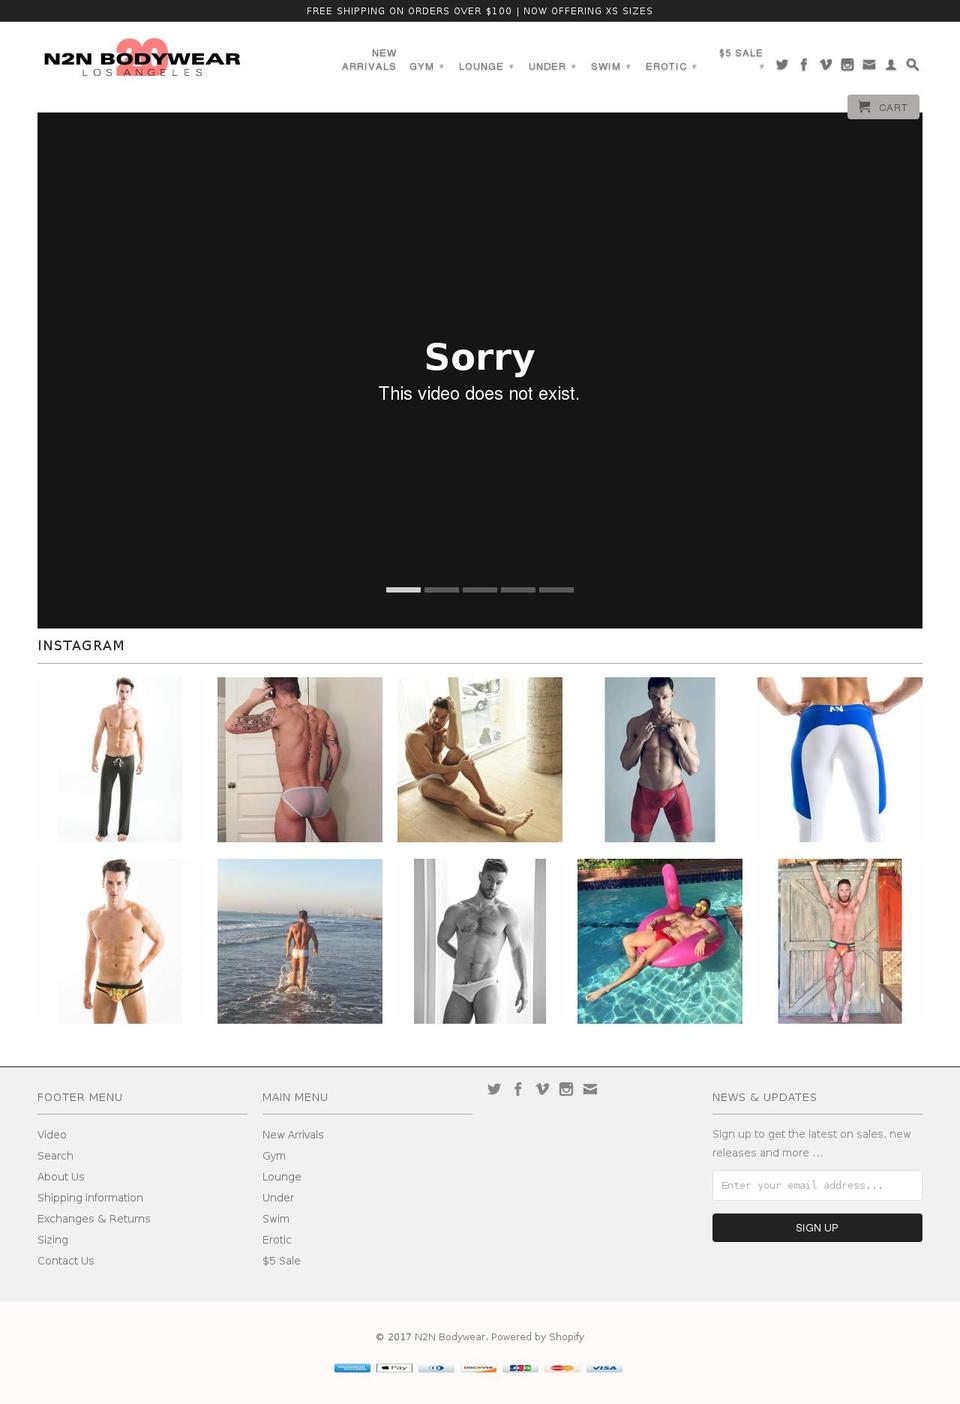 Retina Shopify theme site example n2nbodywear.com